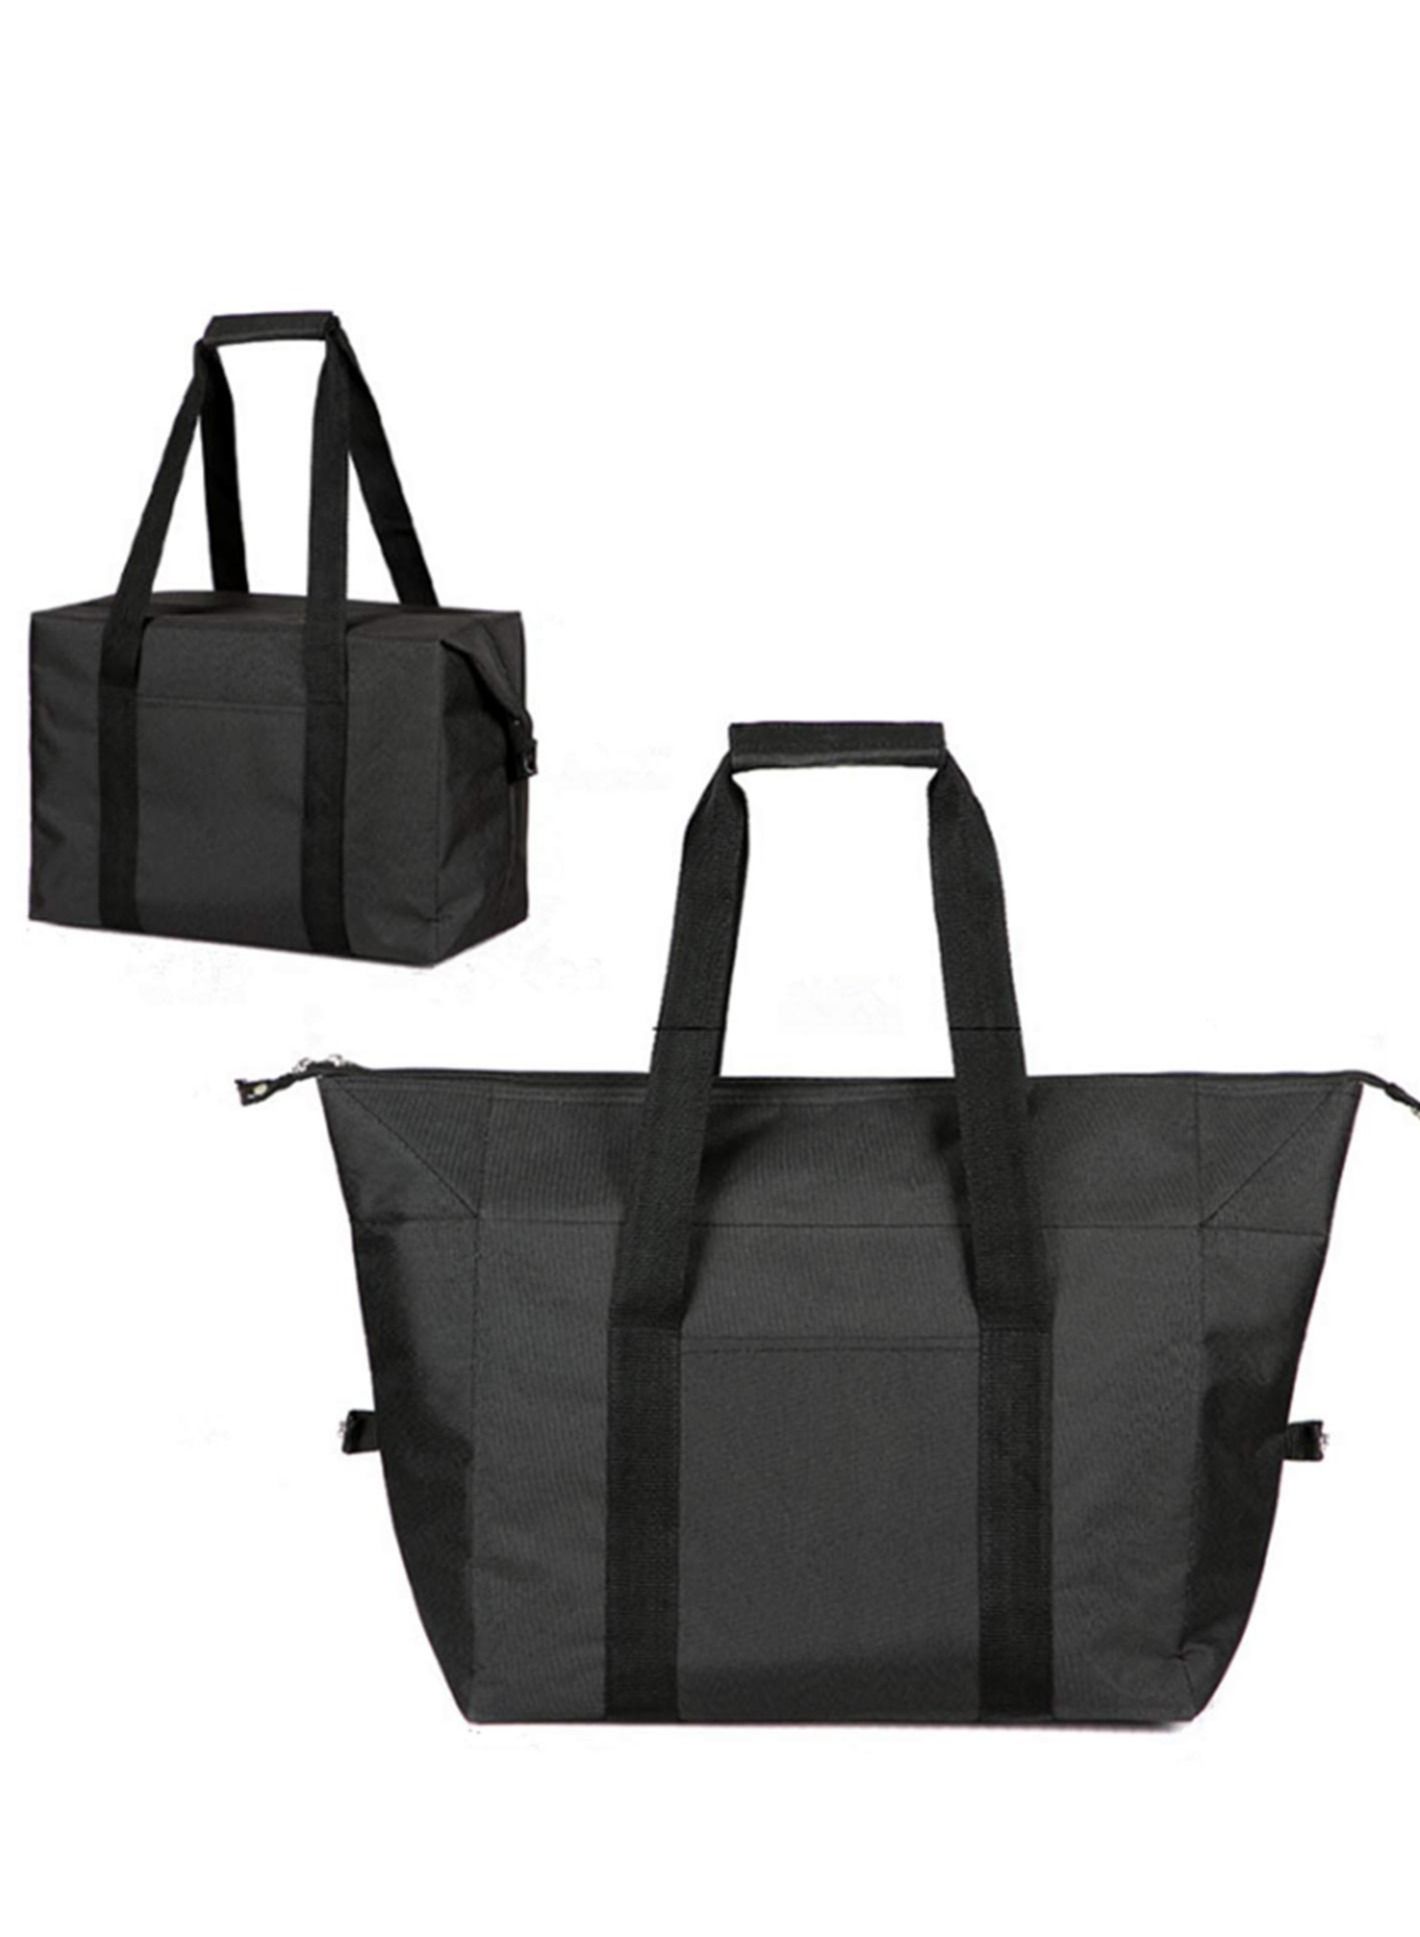 Jay Bag Insulated Bag Hot Cold Frozen Reusable Travel Bag 10 Pck New | eBay